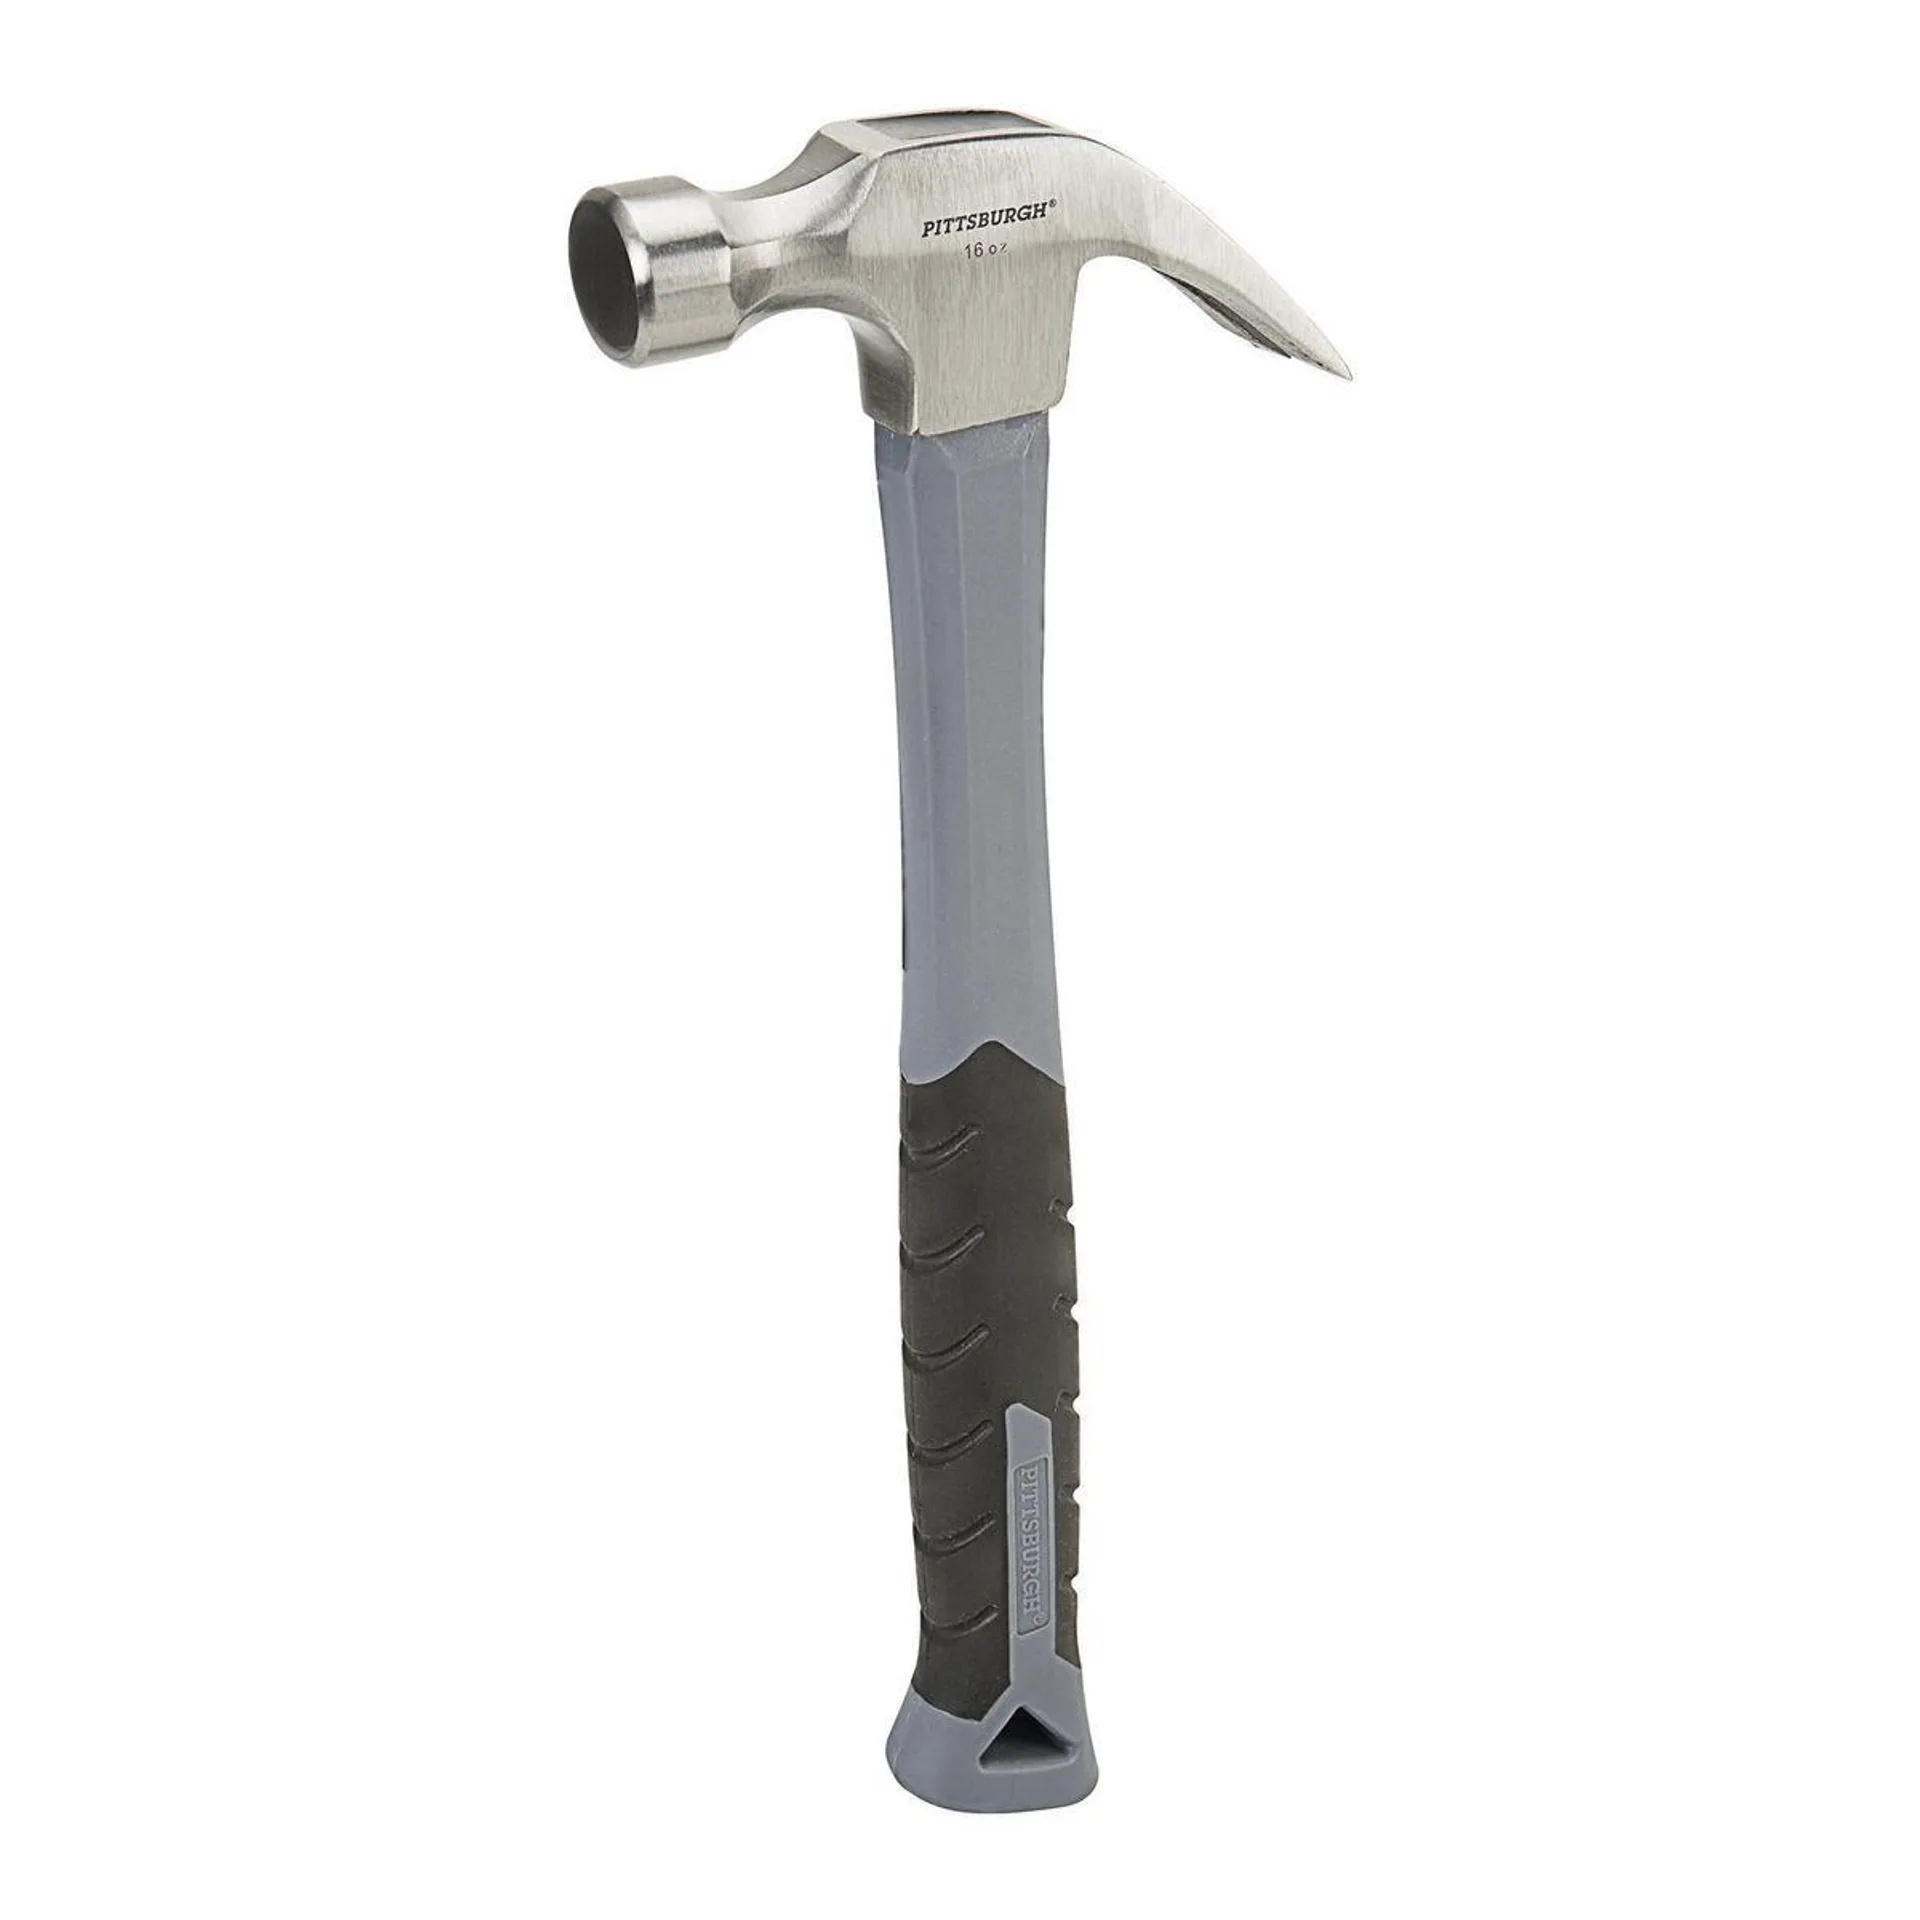 PITTSBURGH 16 oz. Fiberglass Claw Hammer